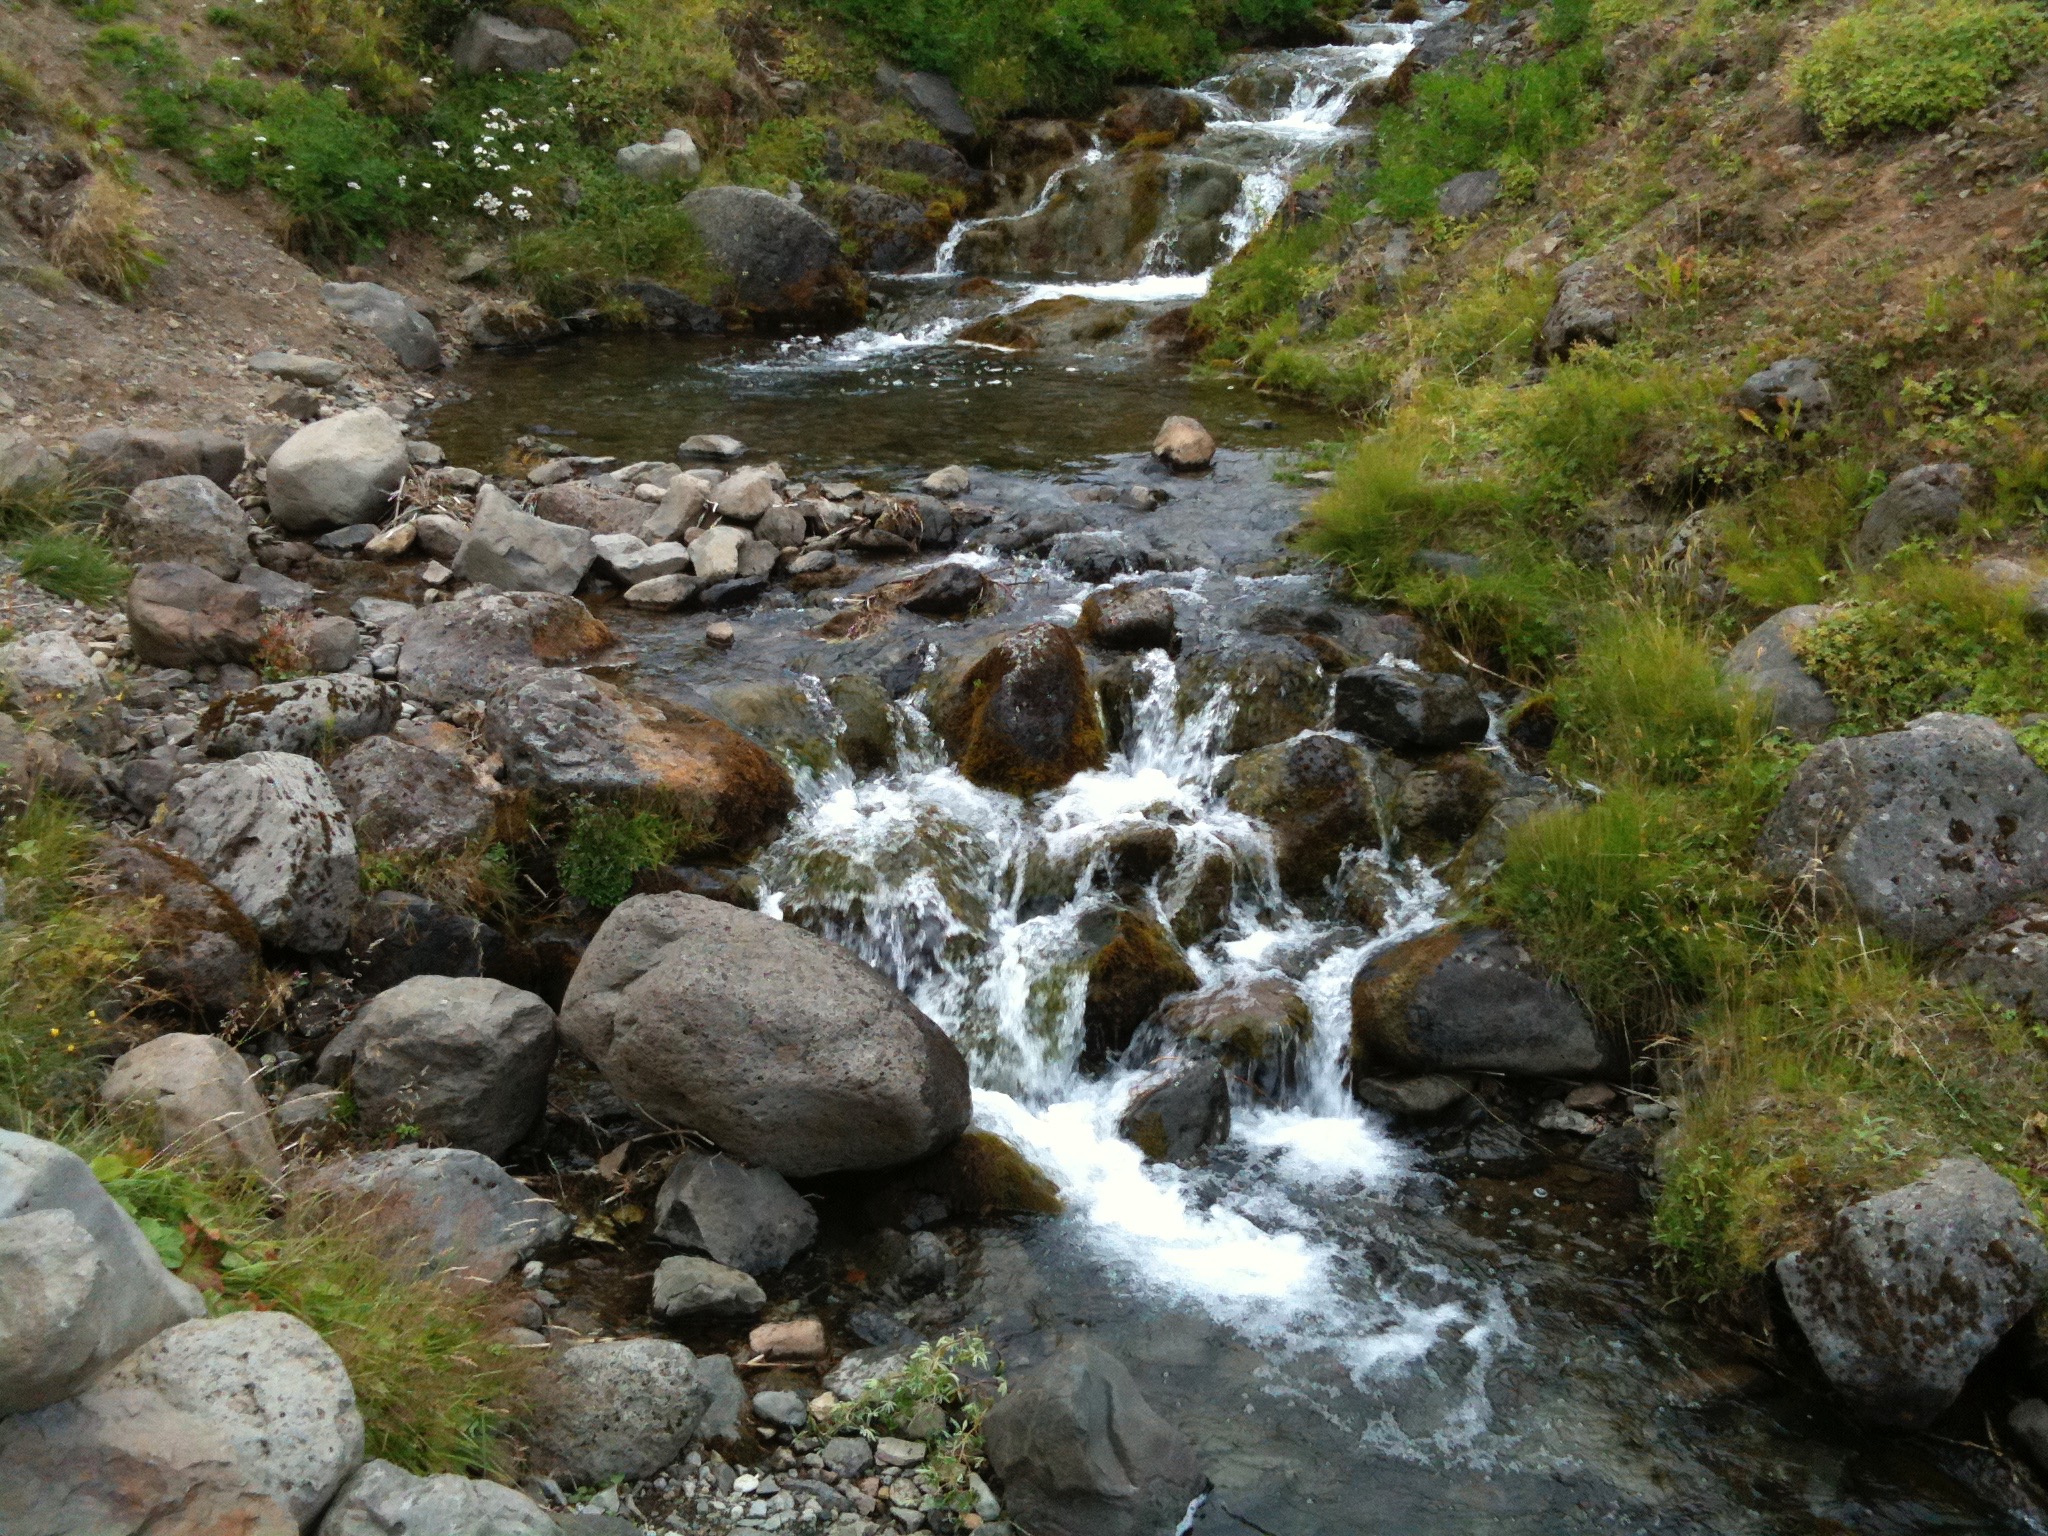 a river running through a rocky area